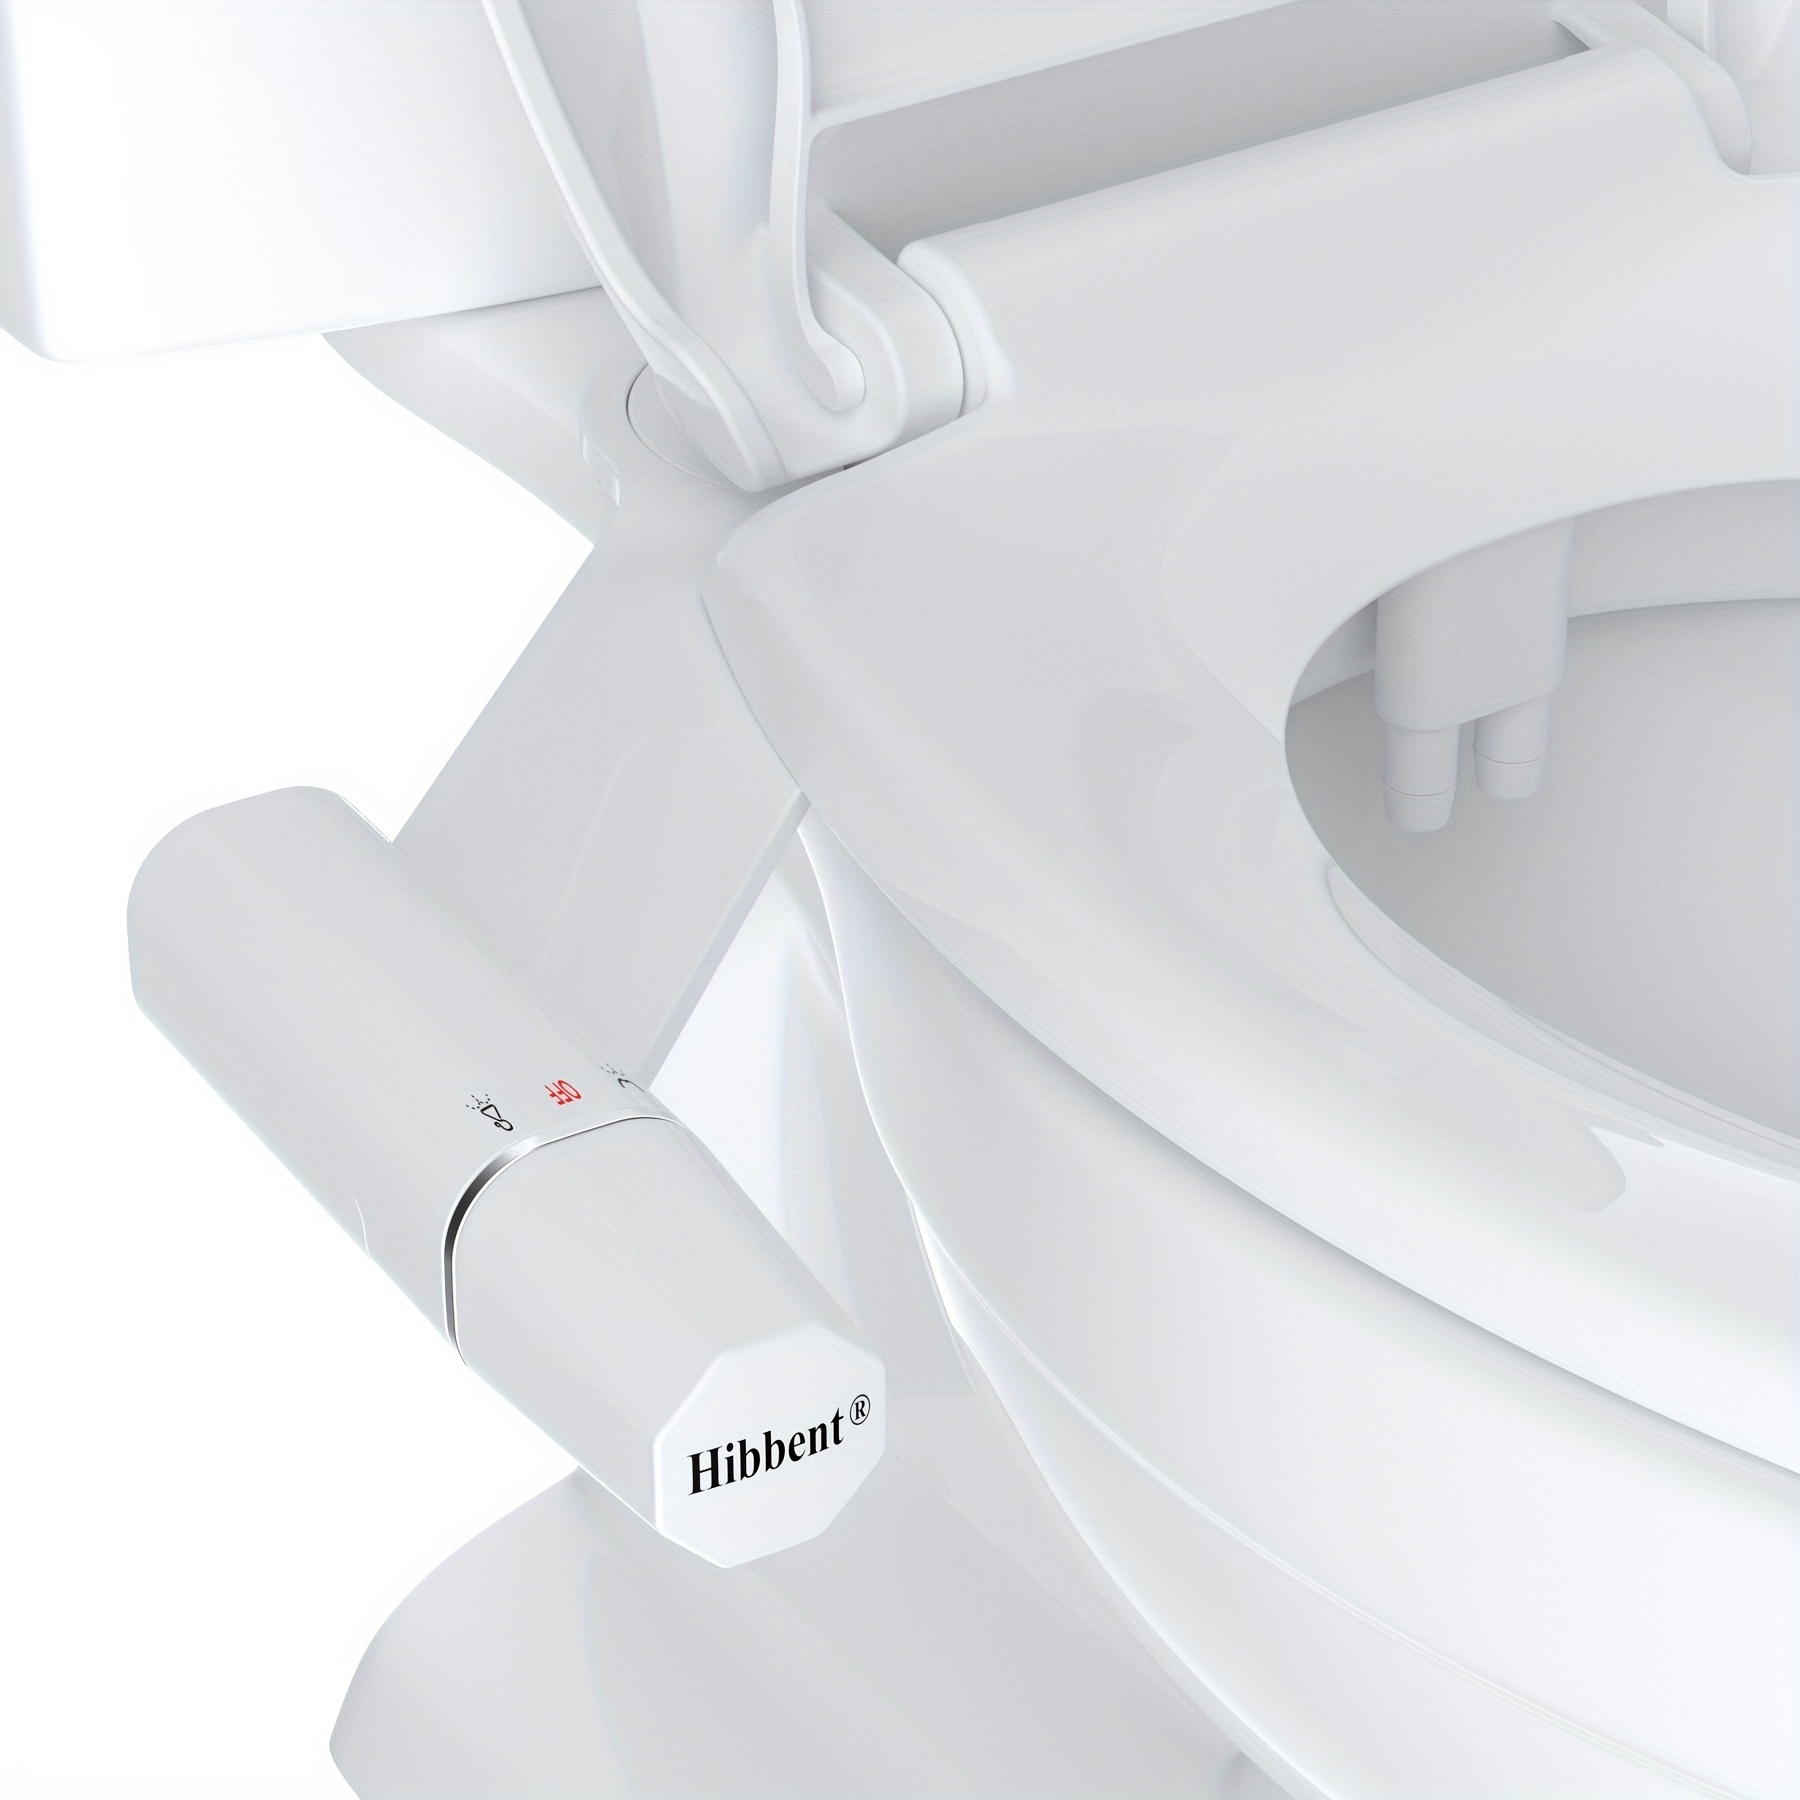 SAMODRA Ultra-Slim Bidet Attachment for Toilet - Dual Nozzle Hygienic  Bidets for Existing Toilets - Adjustable Water Pressure Fresh Water Toilet  Bidet